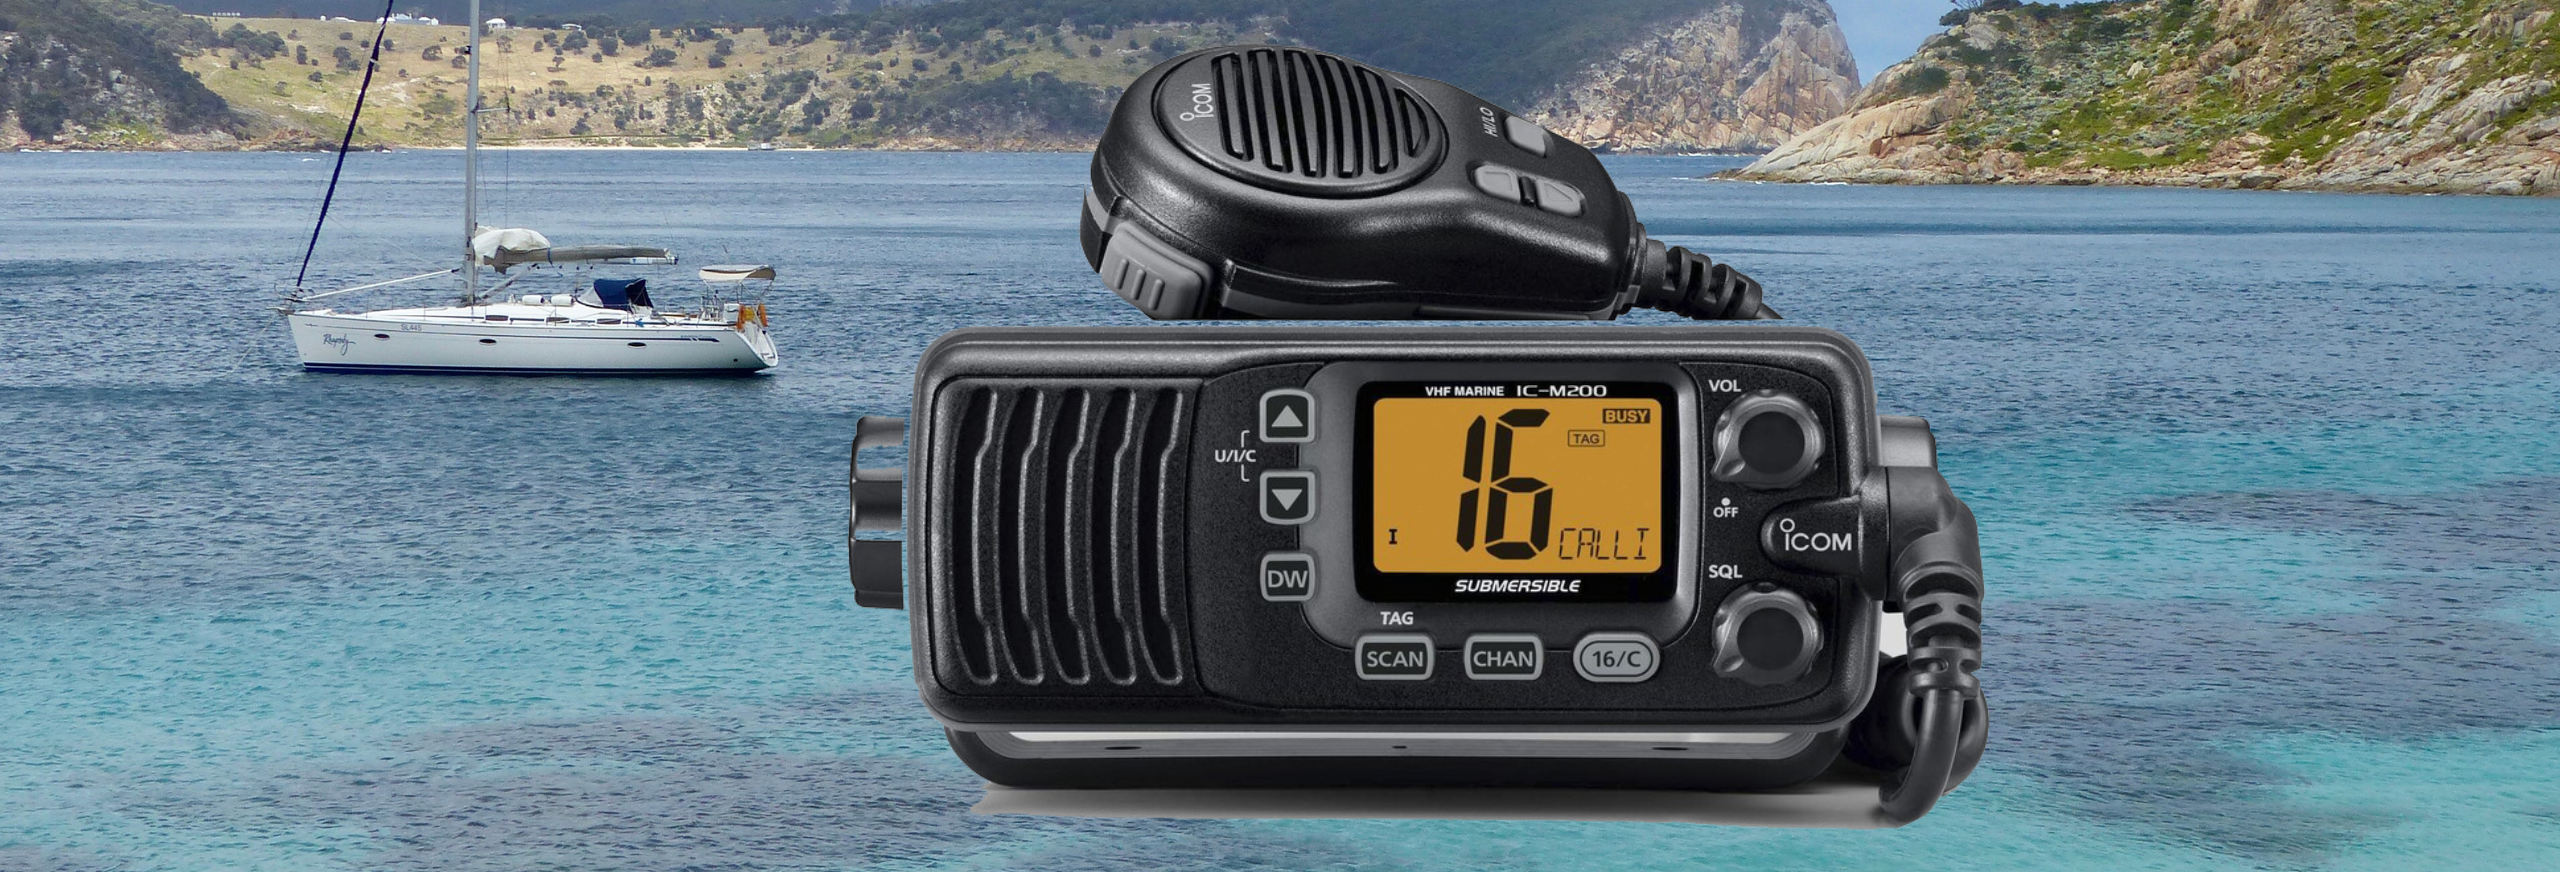 VHF marine radio online course